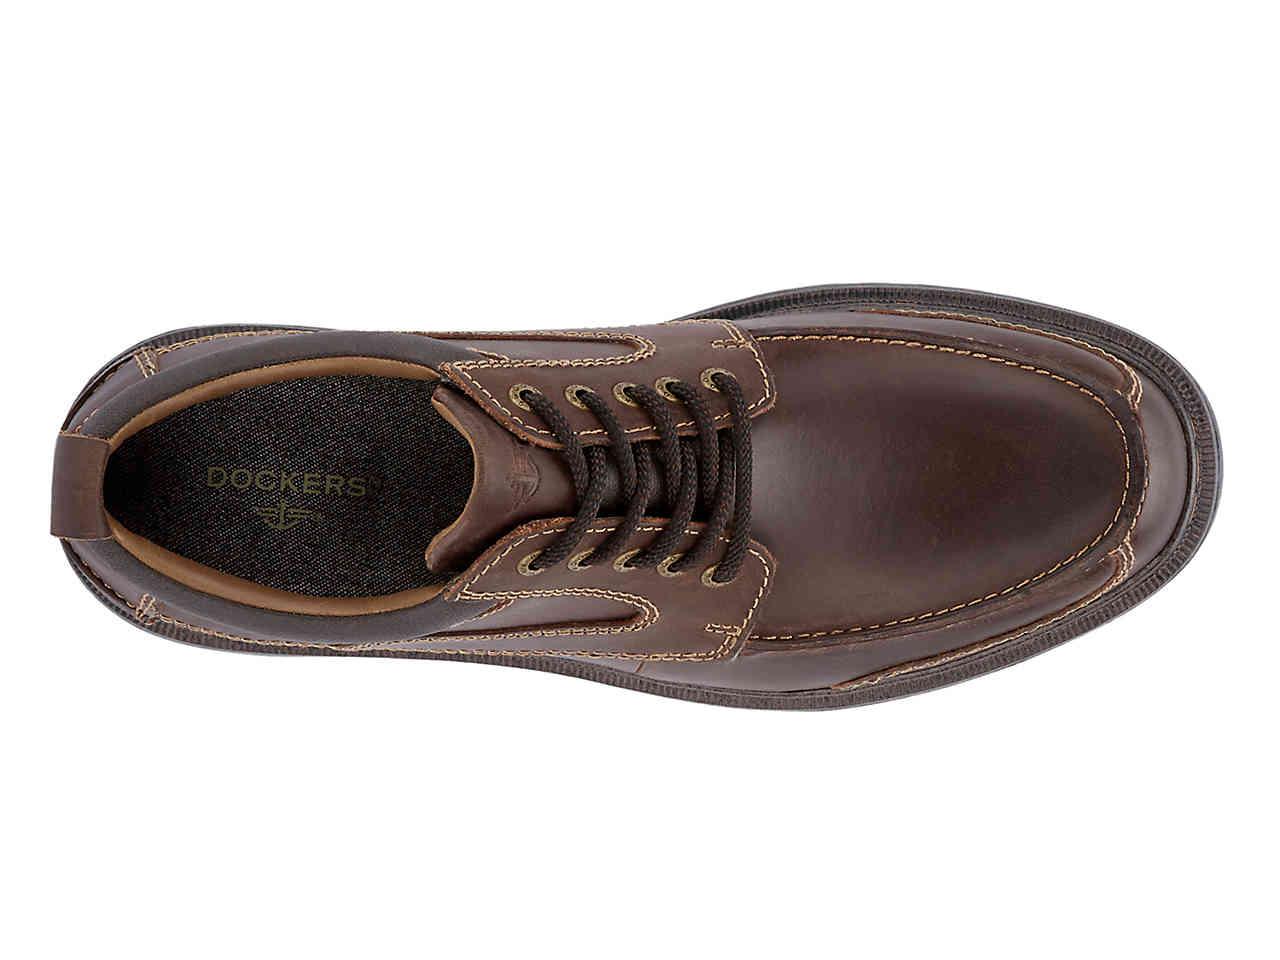 Dockers Leather Overton Oxford in Dark Brown (Brown) for Men - Lyst